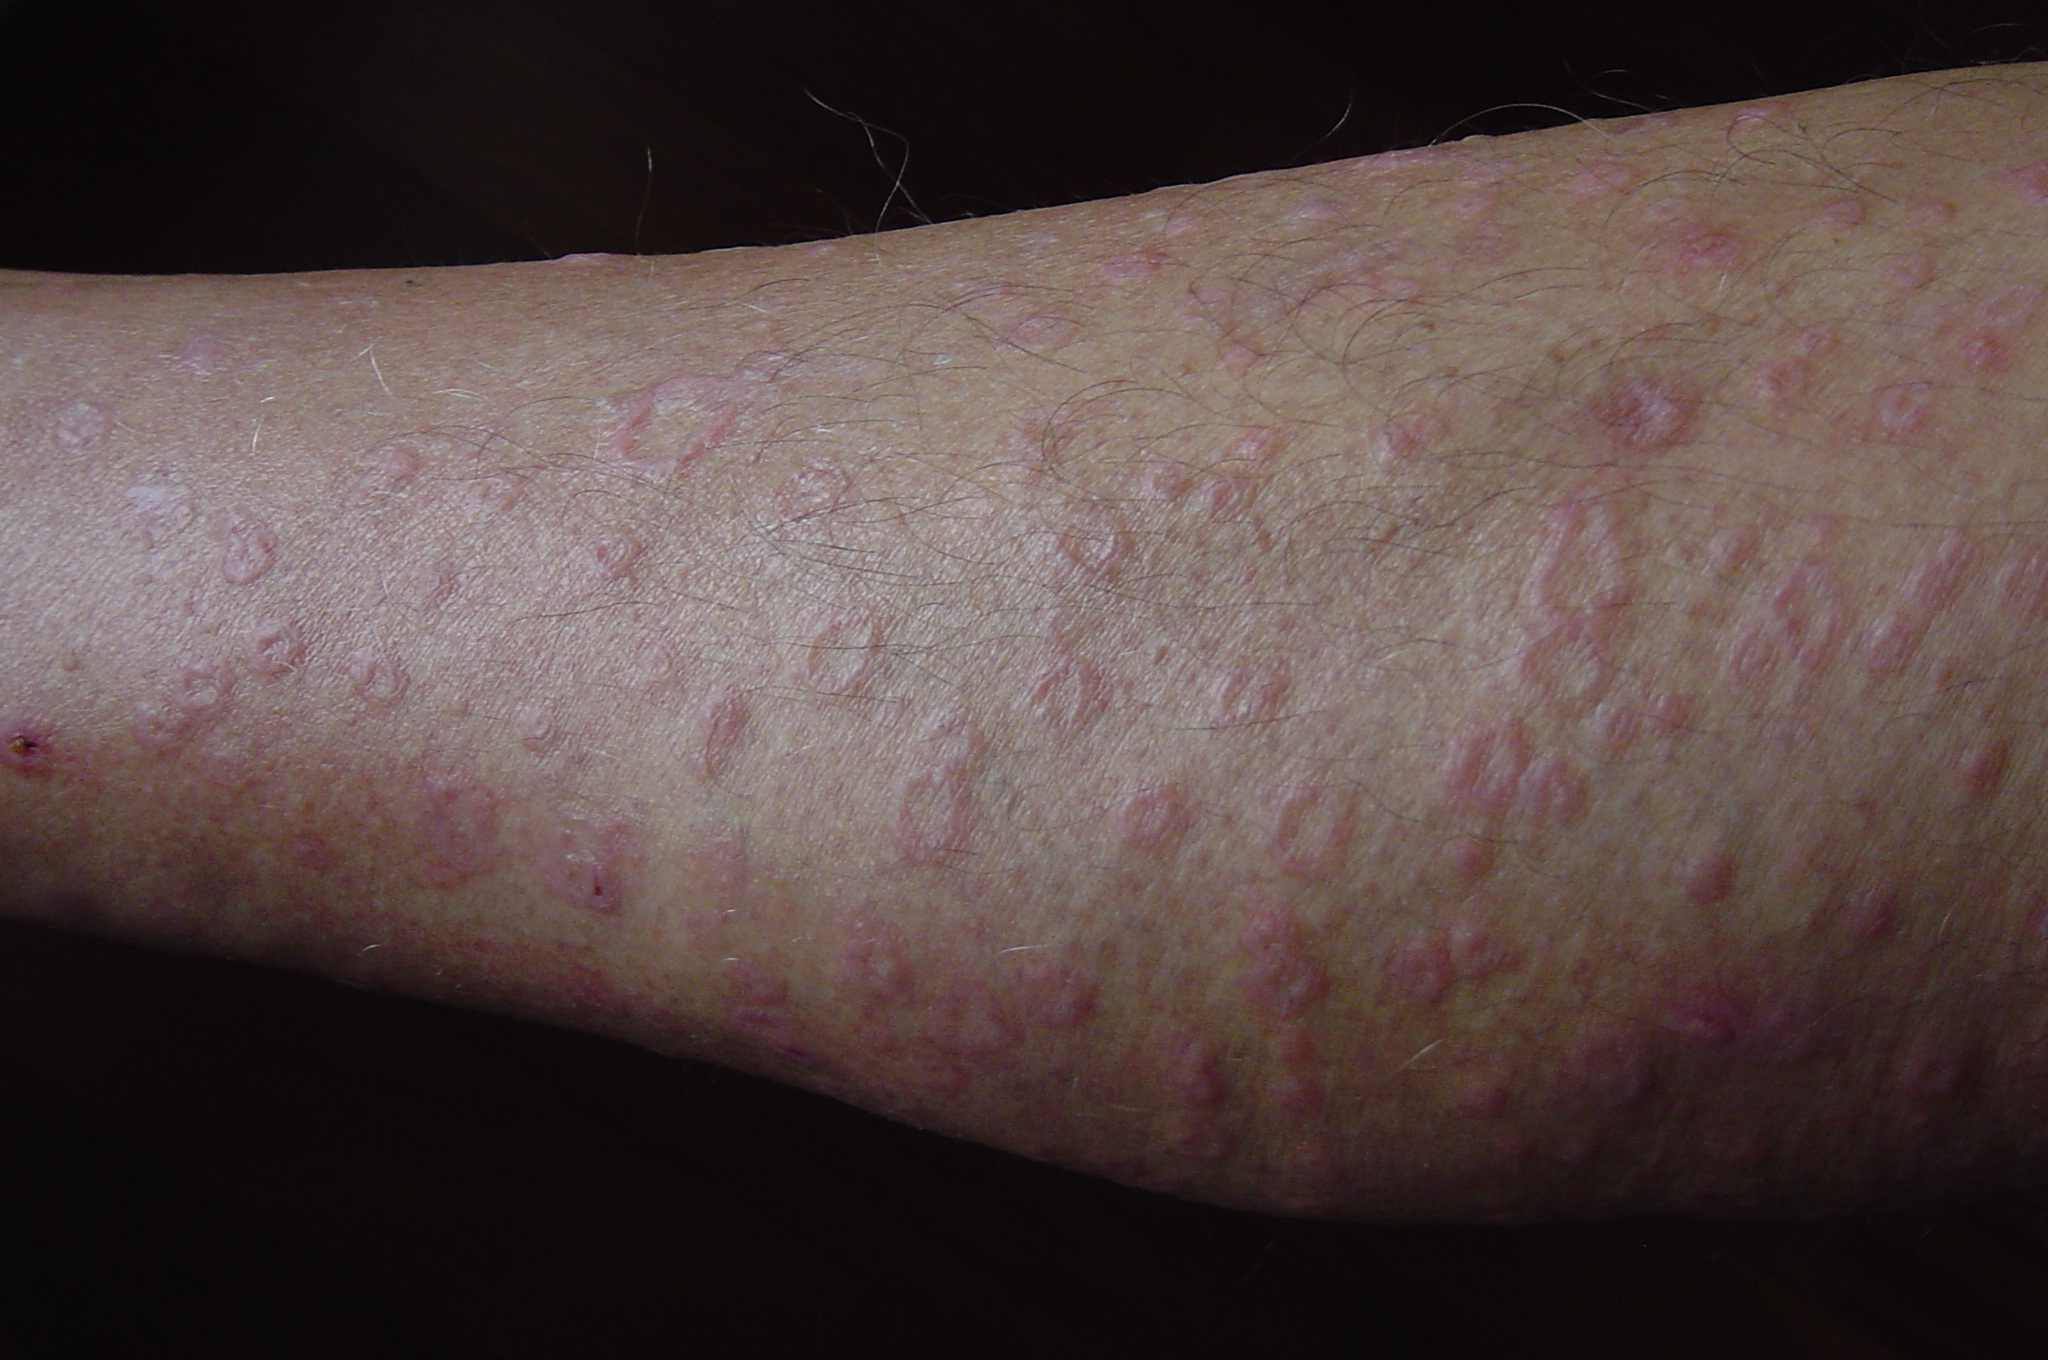 dermatitis on leg pictures, photos